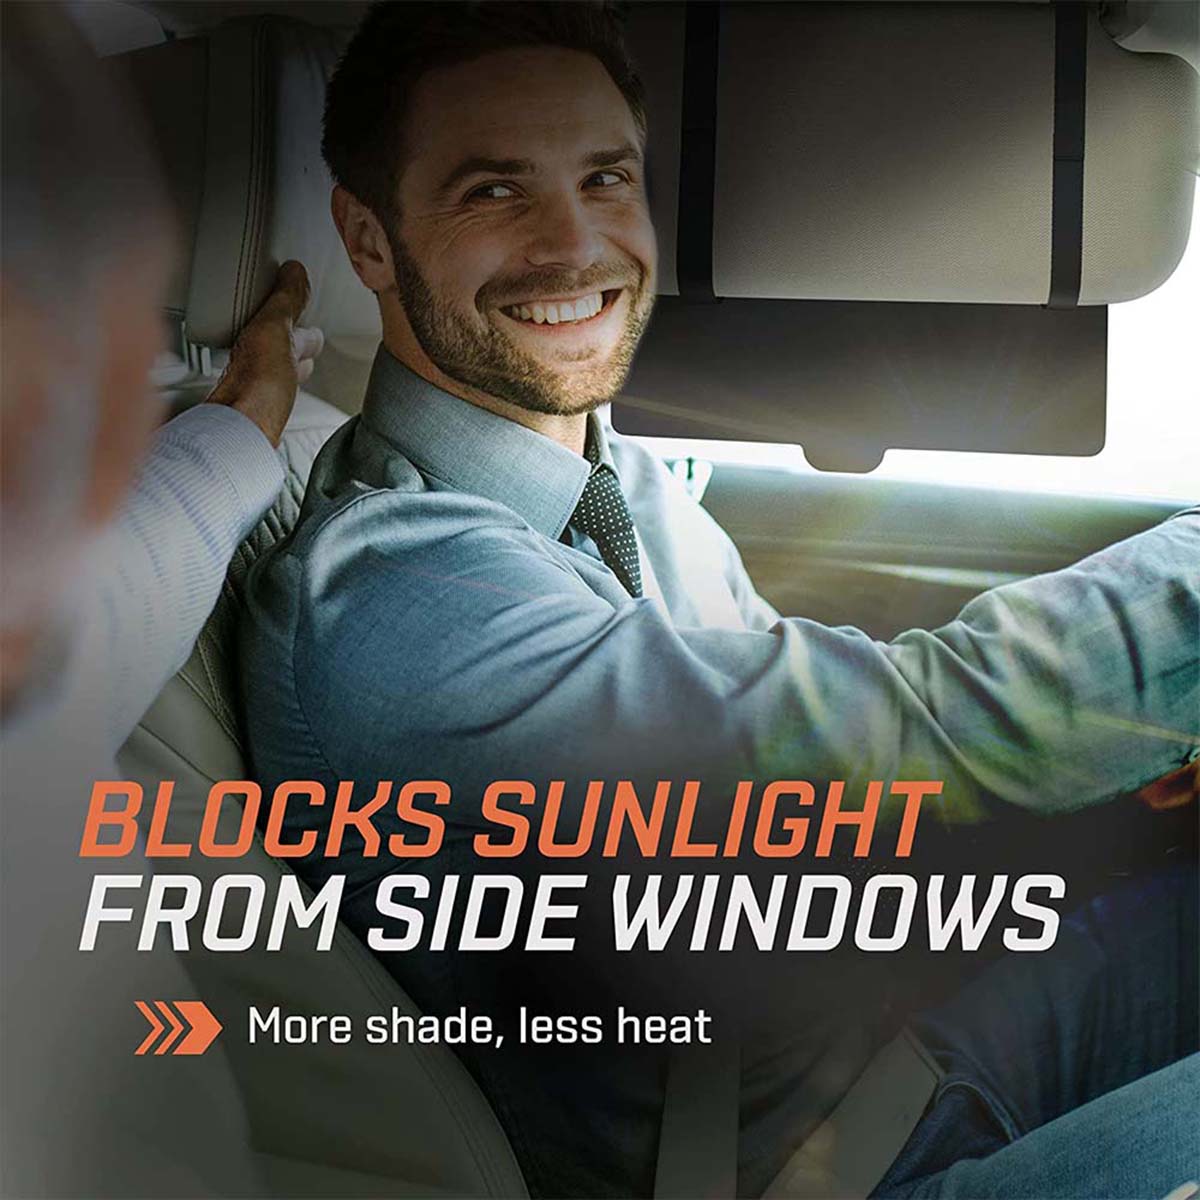 Polarized Sun Visor Sunshade Extender for Car with Polycarbonate Lens